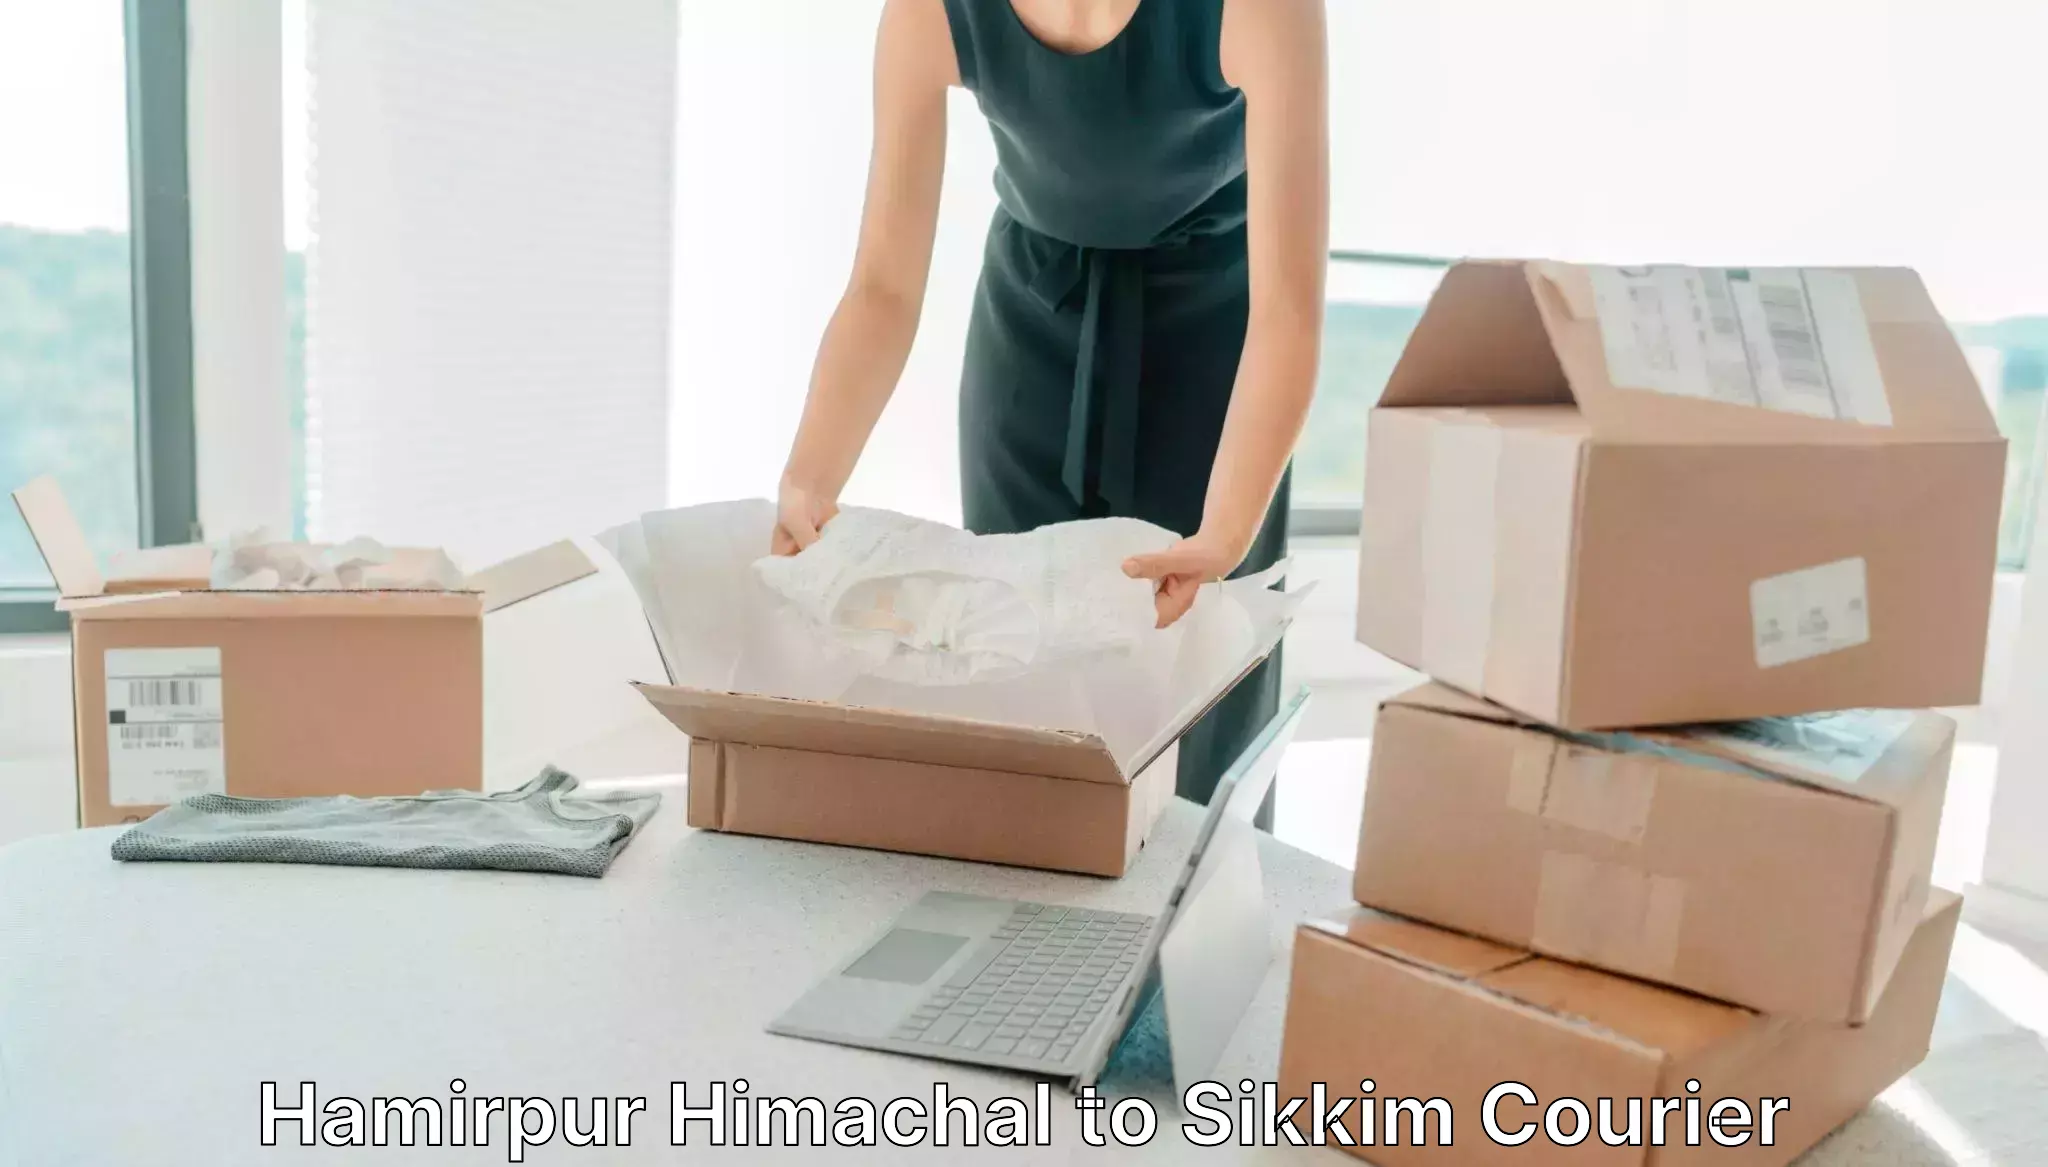 Professional courier services Hamirpur Himachal to Gangtok